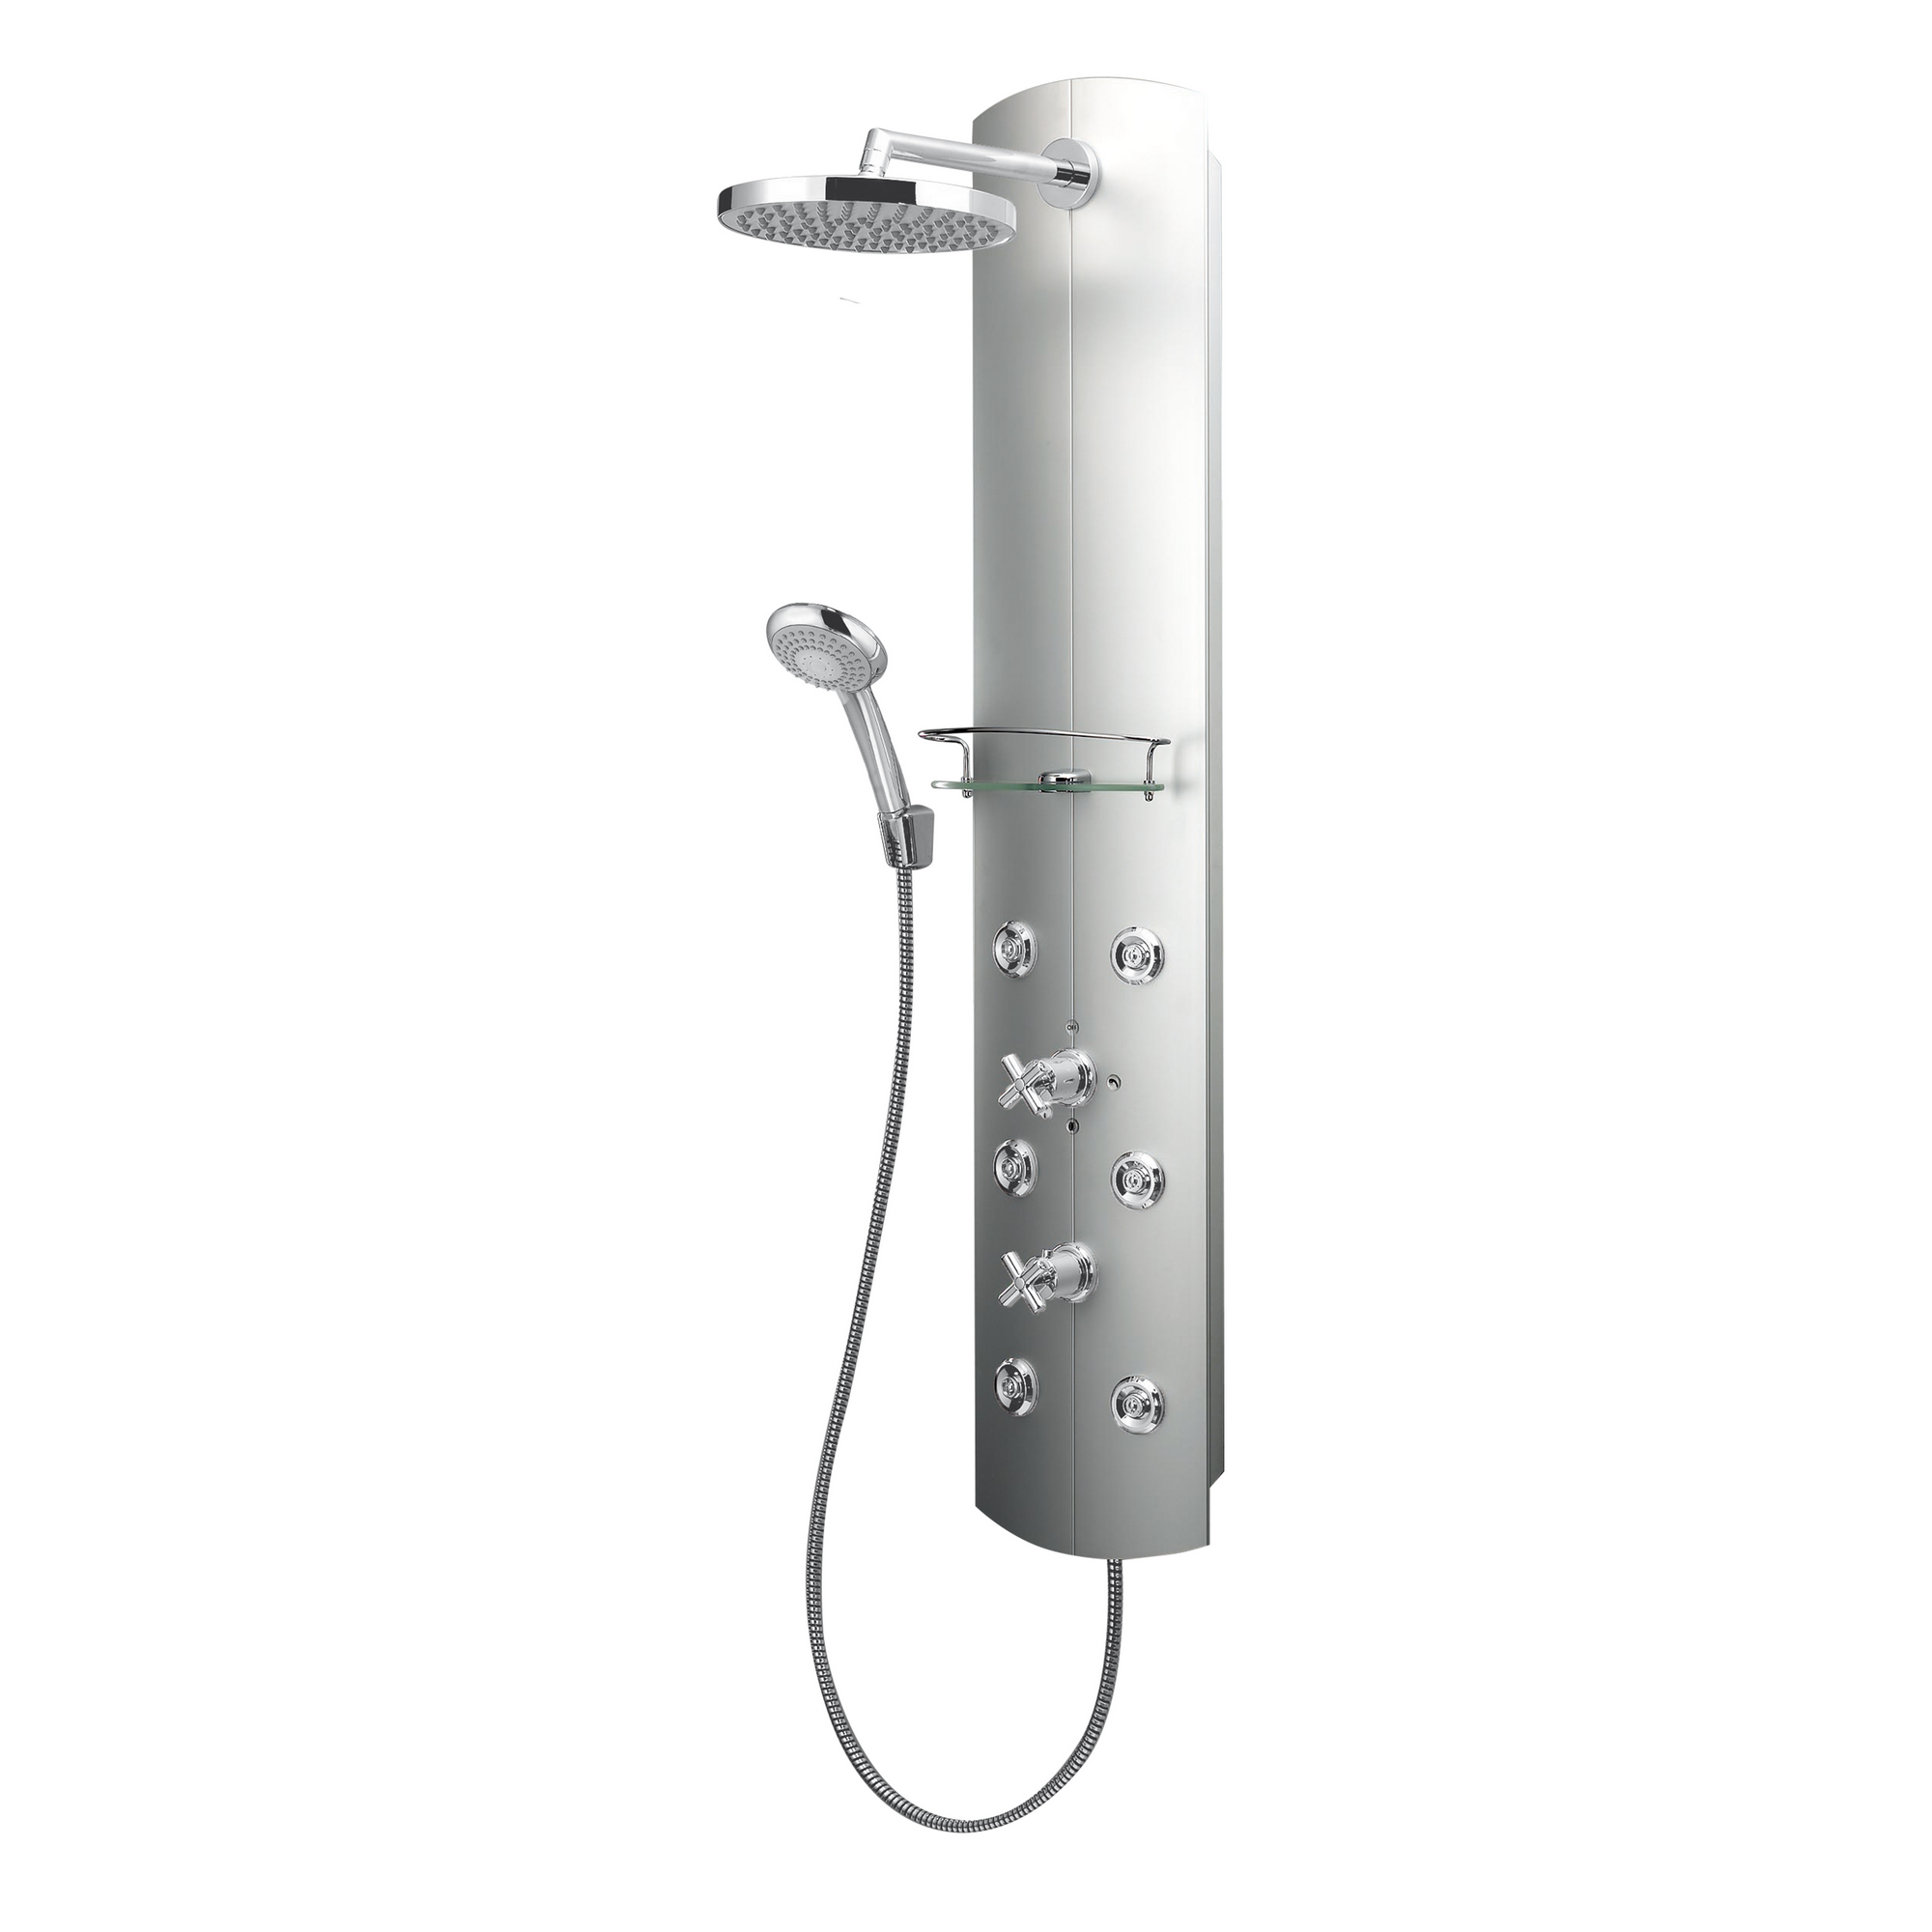 Duschpaneel 'DuschMaster' mit Thermostat, rund, 135 cm + product picture